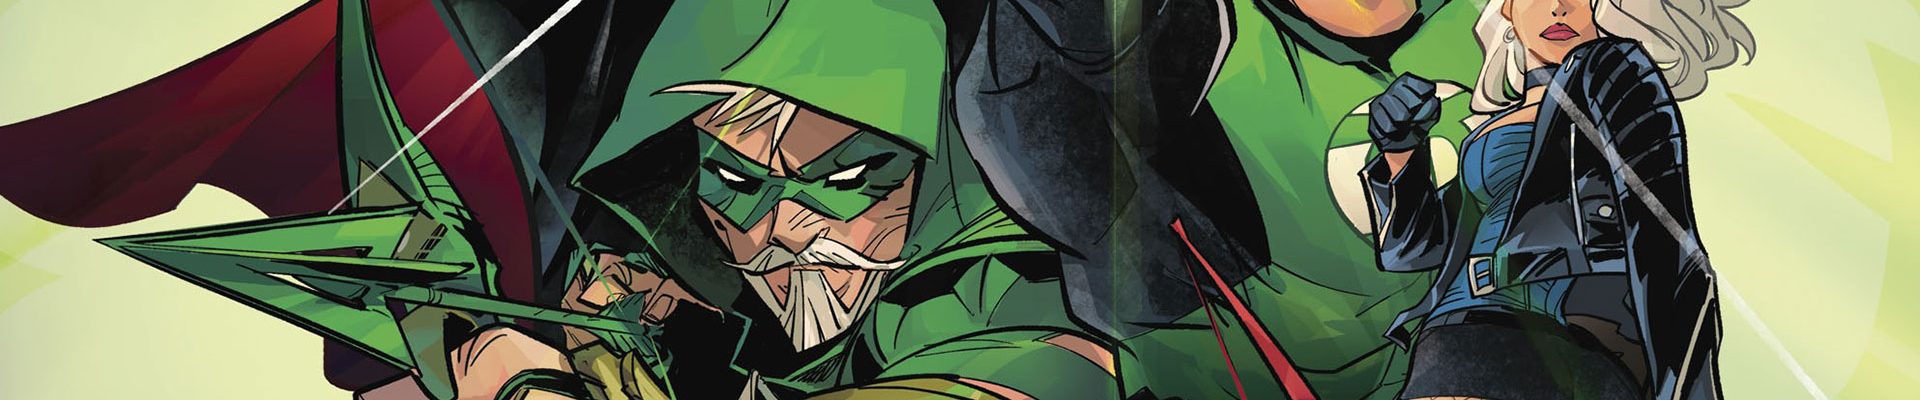 Green Arrow 31